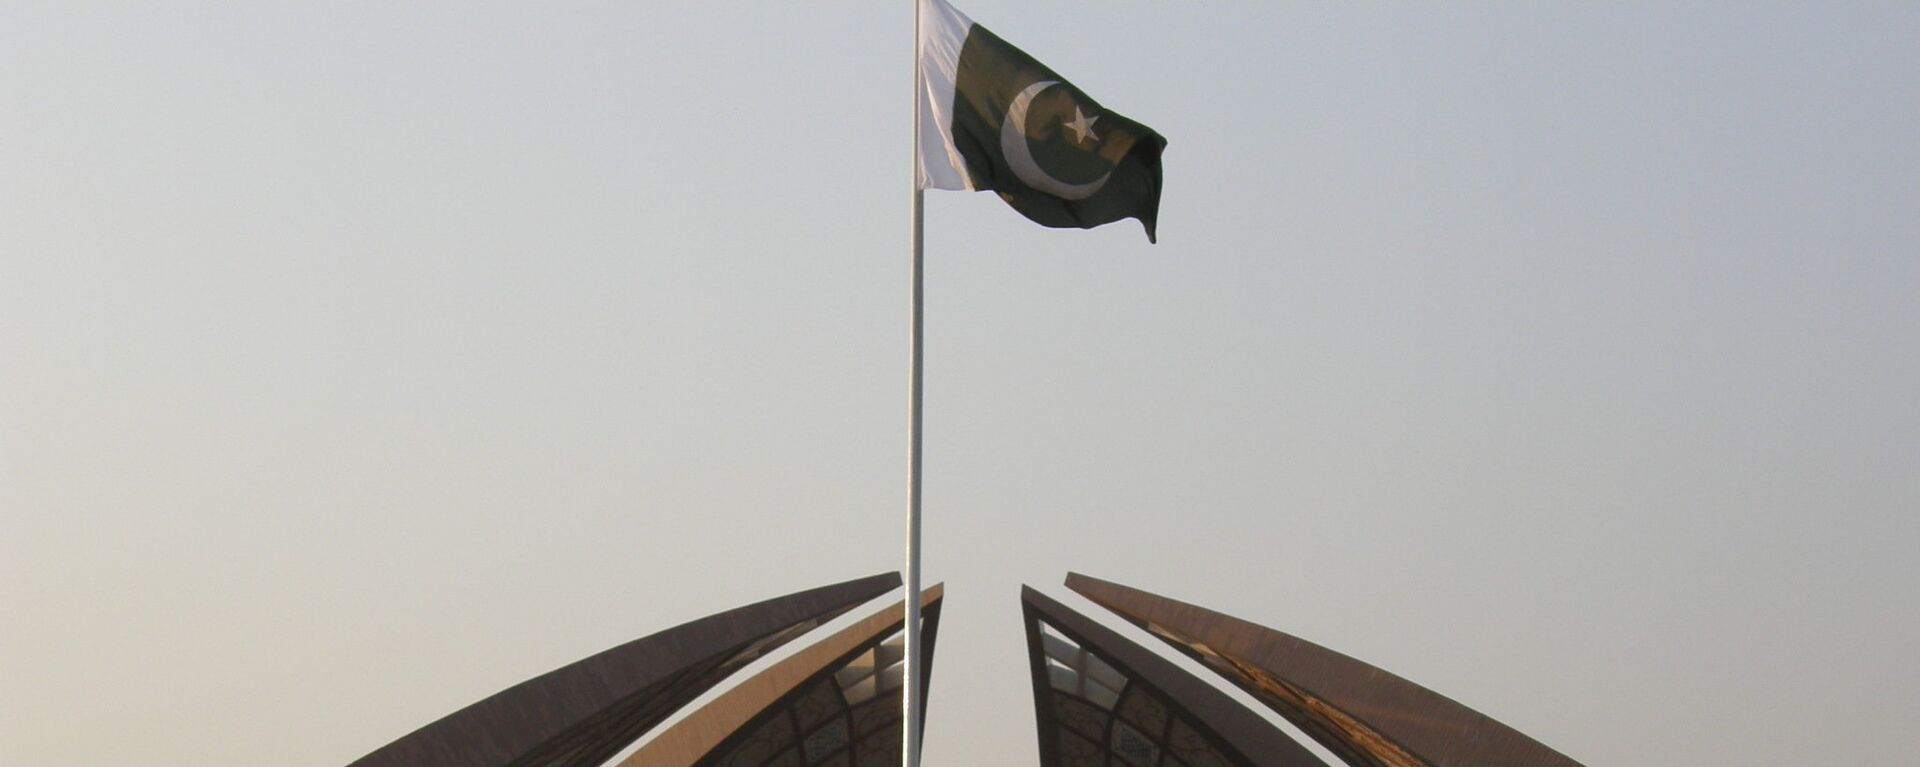 Bandera de Pakistán en Islamabad - Sputnik Mundo, 1920, 07.09.2021